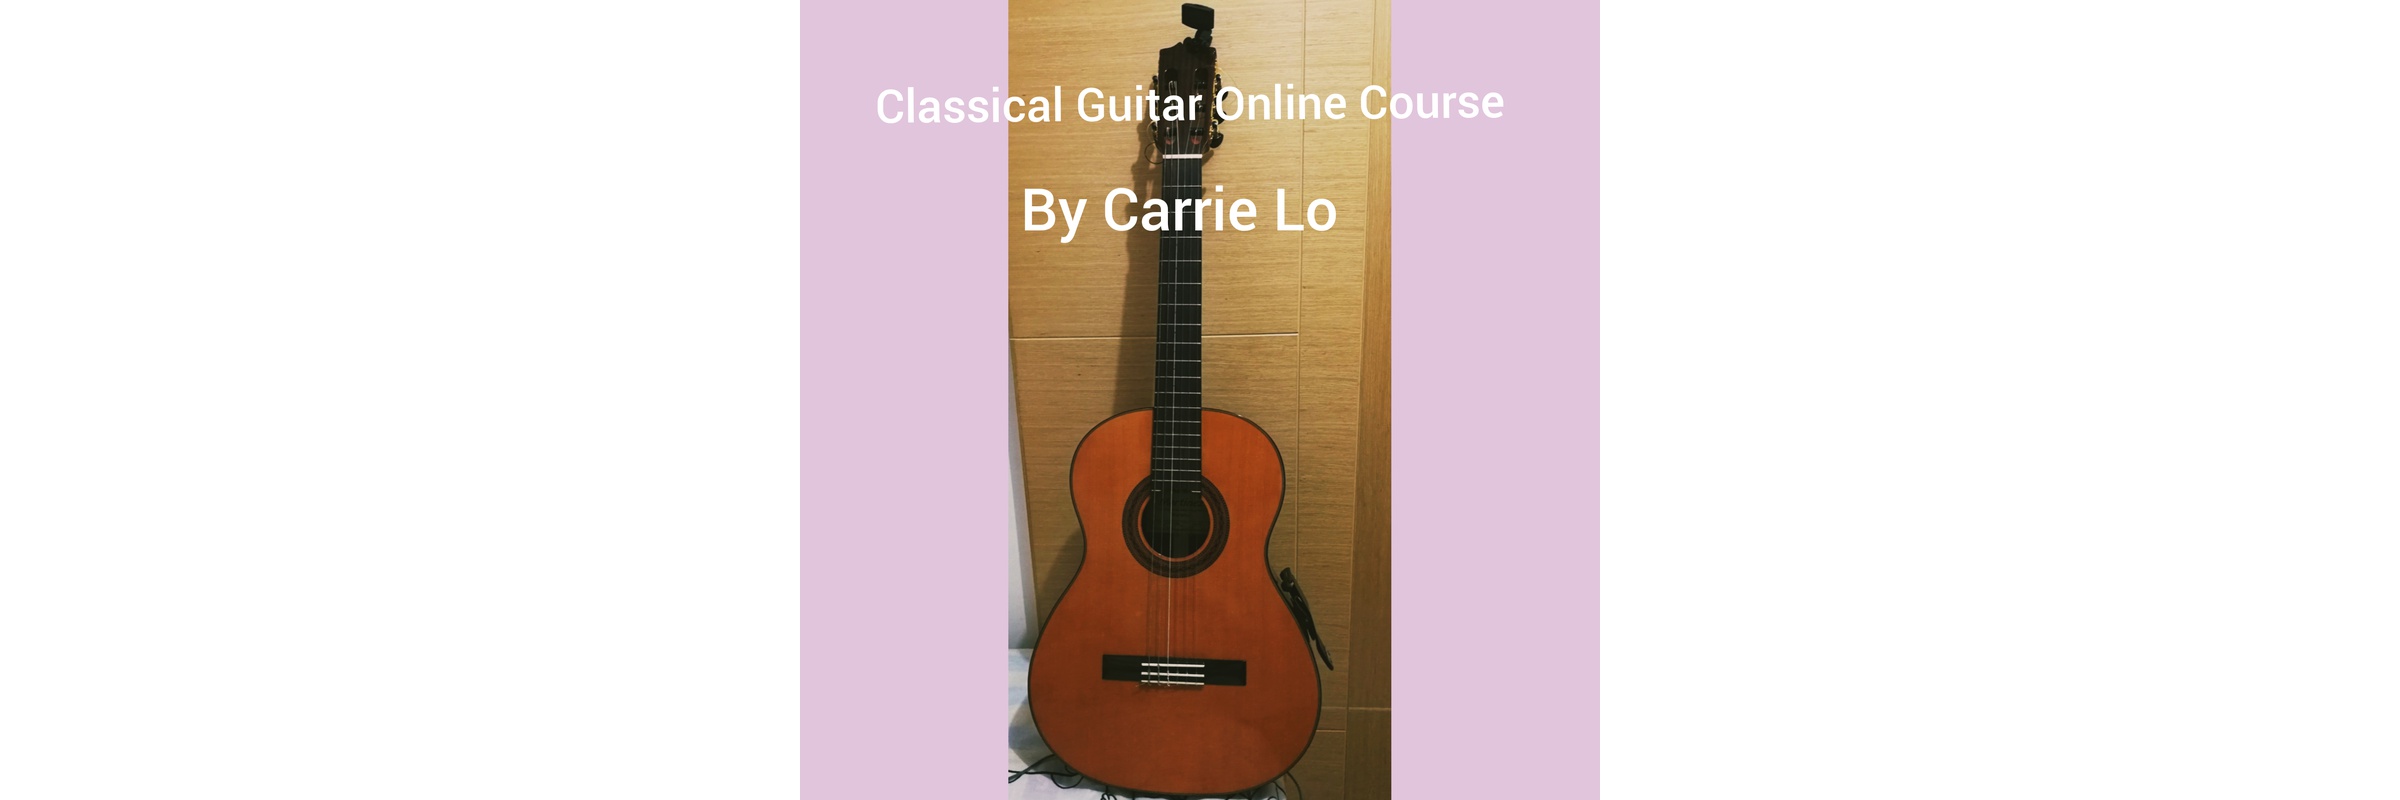 Classical Guitar Club - Classical Guitar beginner 10 recorded lessons 古典結他初學錄製課程10堂(Cantonese) (廣東話教學)